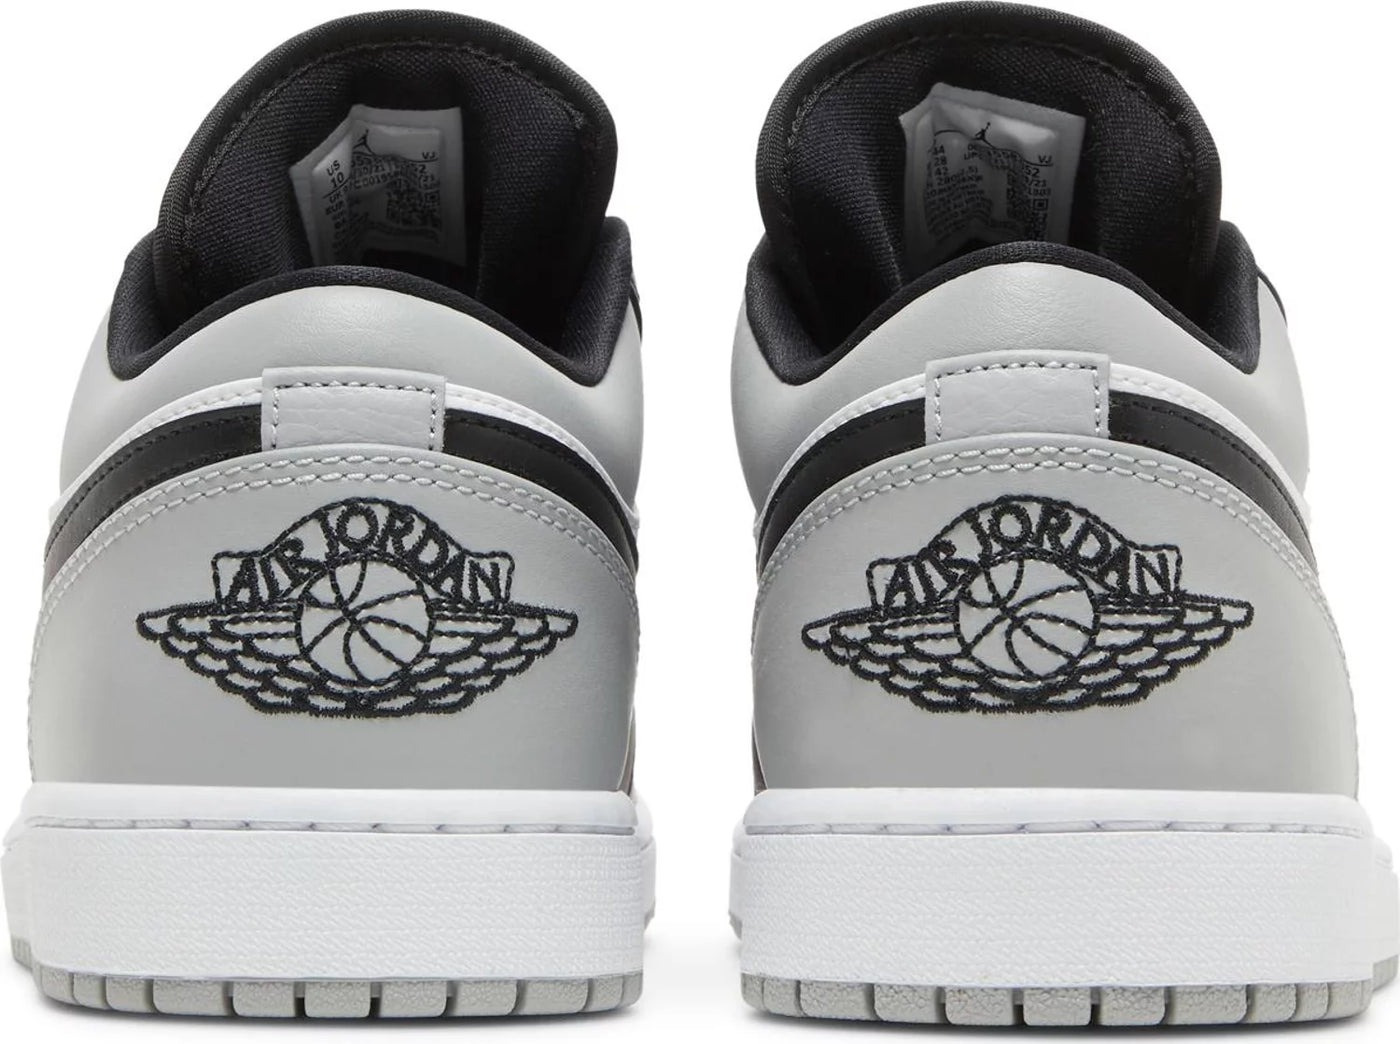 Nike Jordan 1 Low Shadow Toe